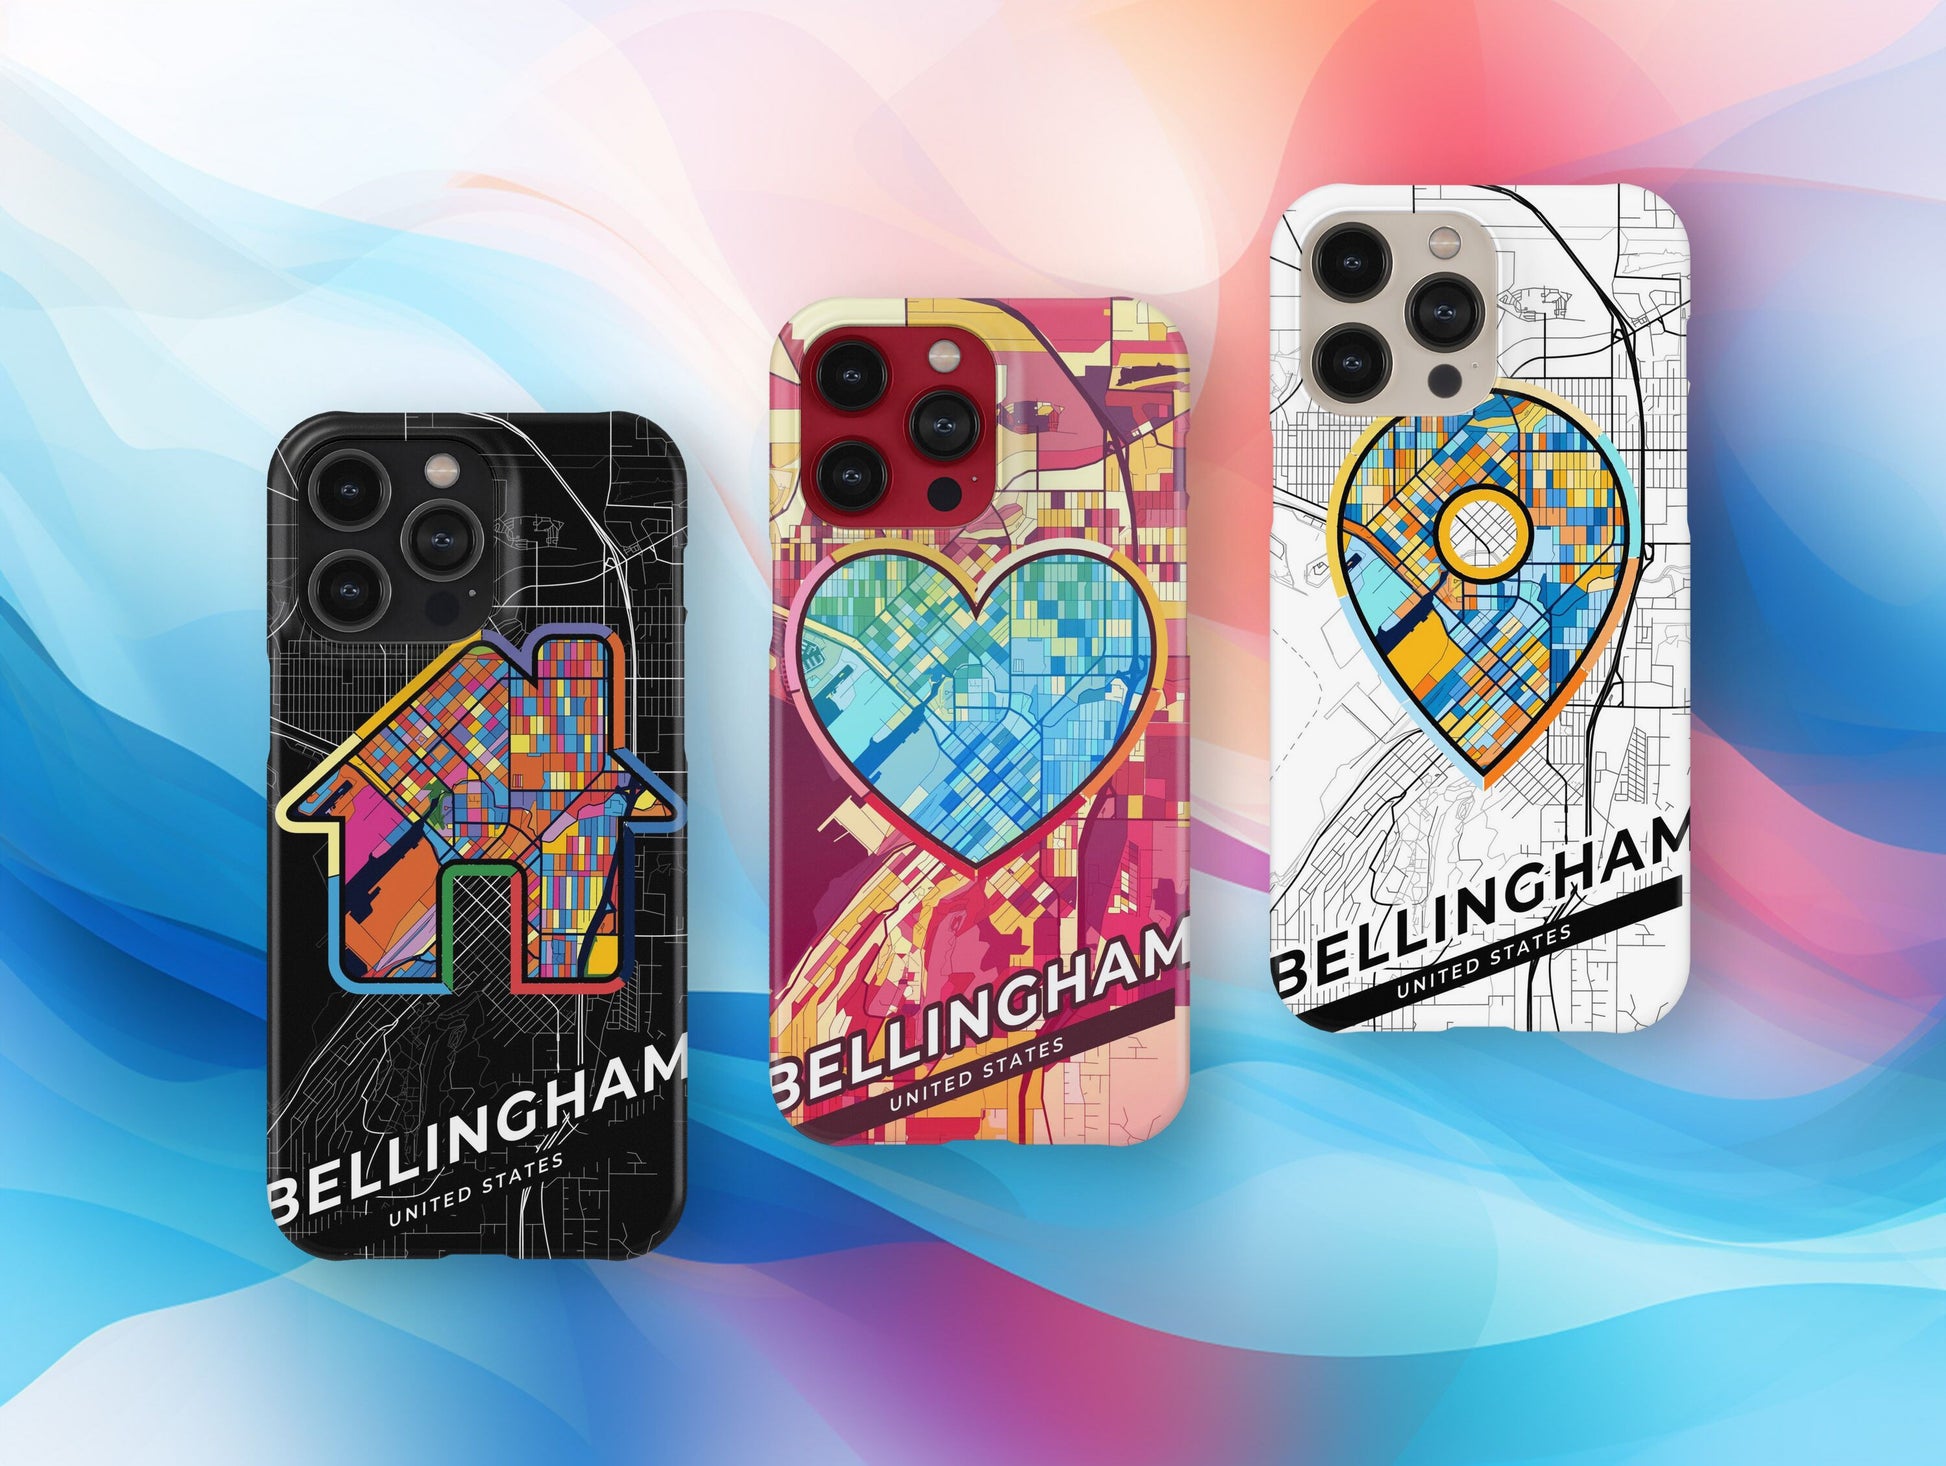 Bellingham Washington slim phone case with colorful icon. Birthday, wedding or housewarming gift. Couple match cases.